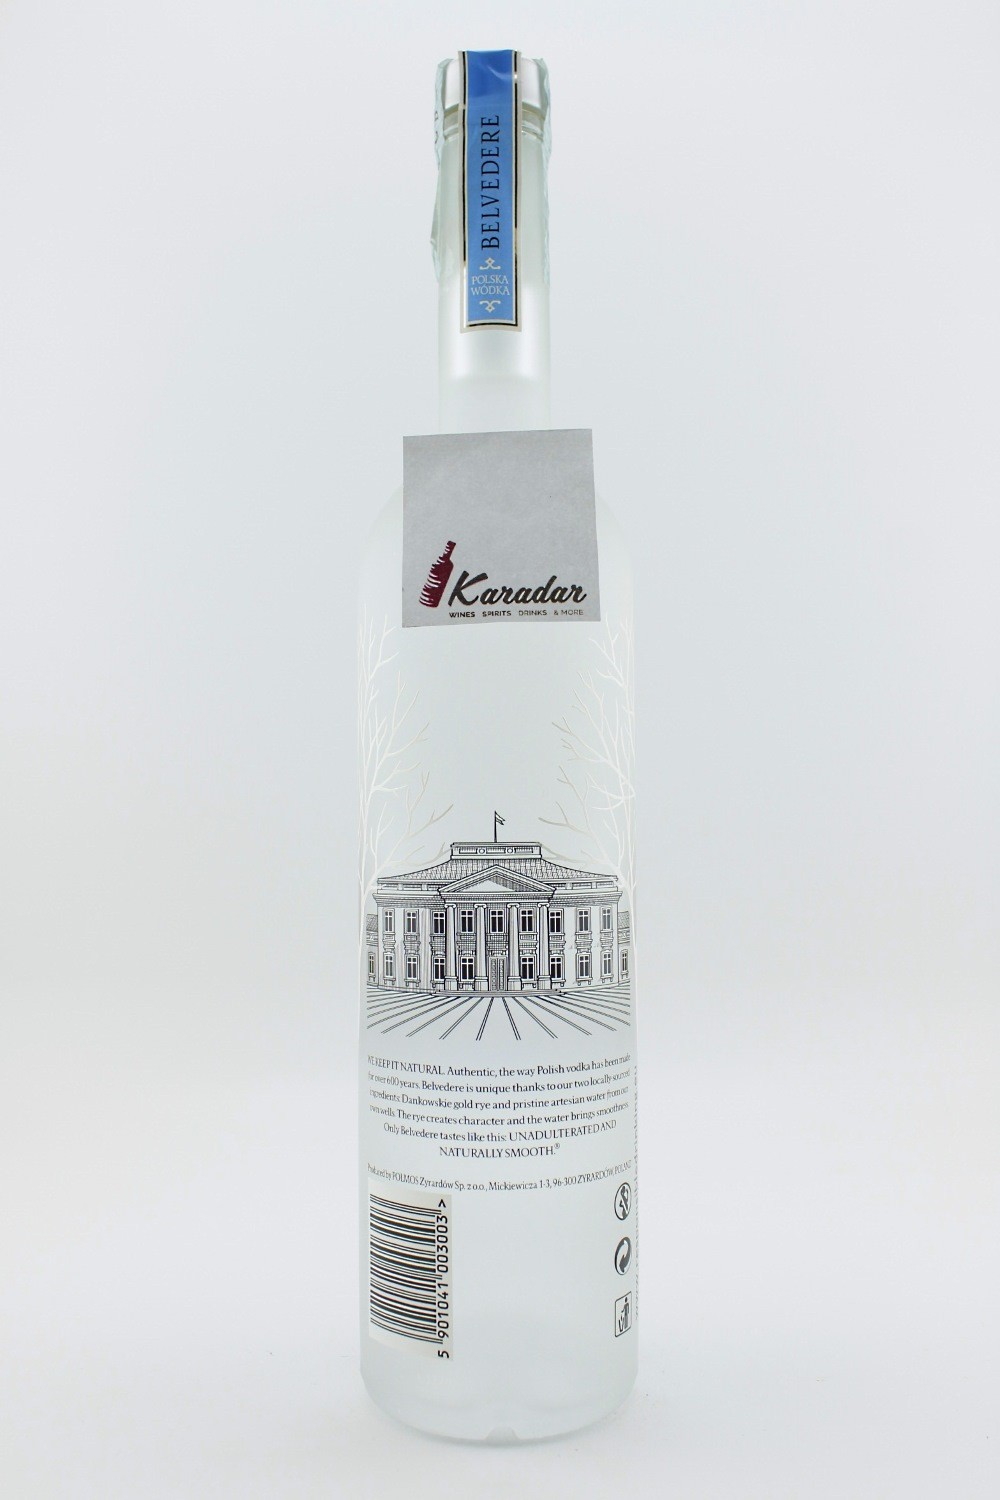 Vodka Belvedere 40% vol. Vodka